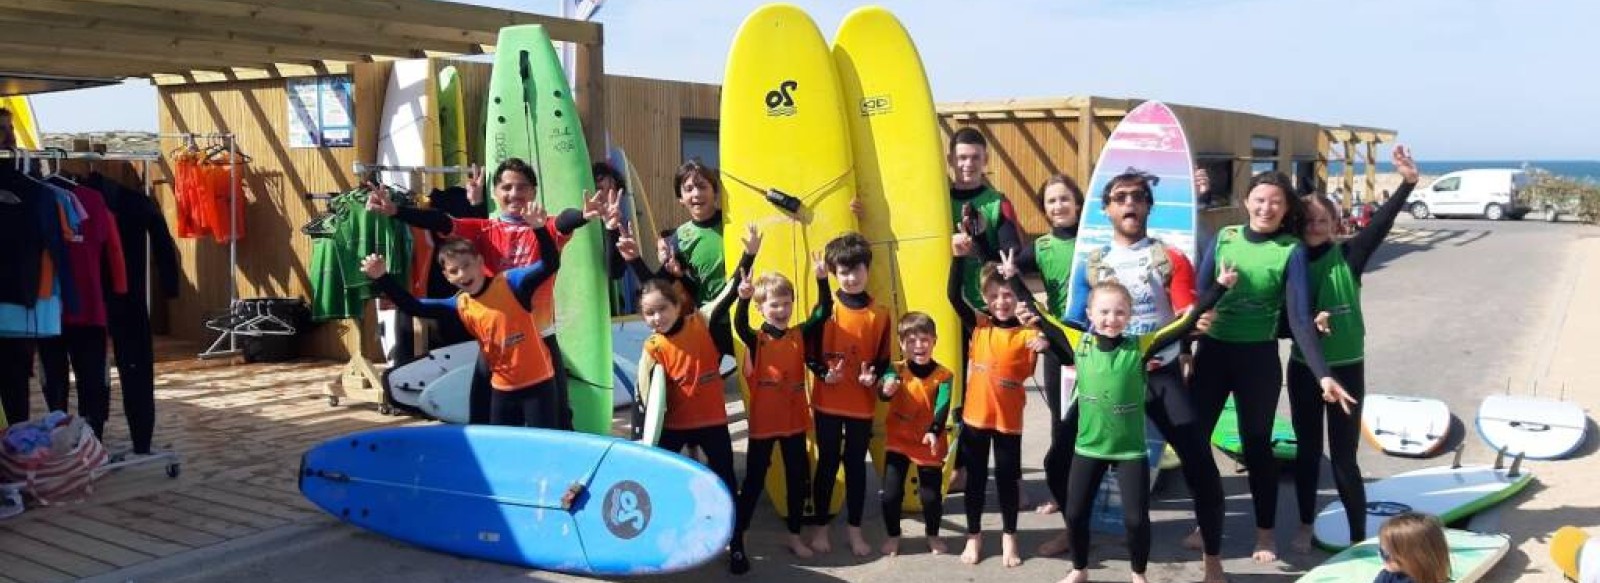 ATLANTIC LEZARD SURF SCHOOL